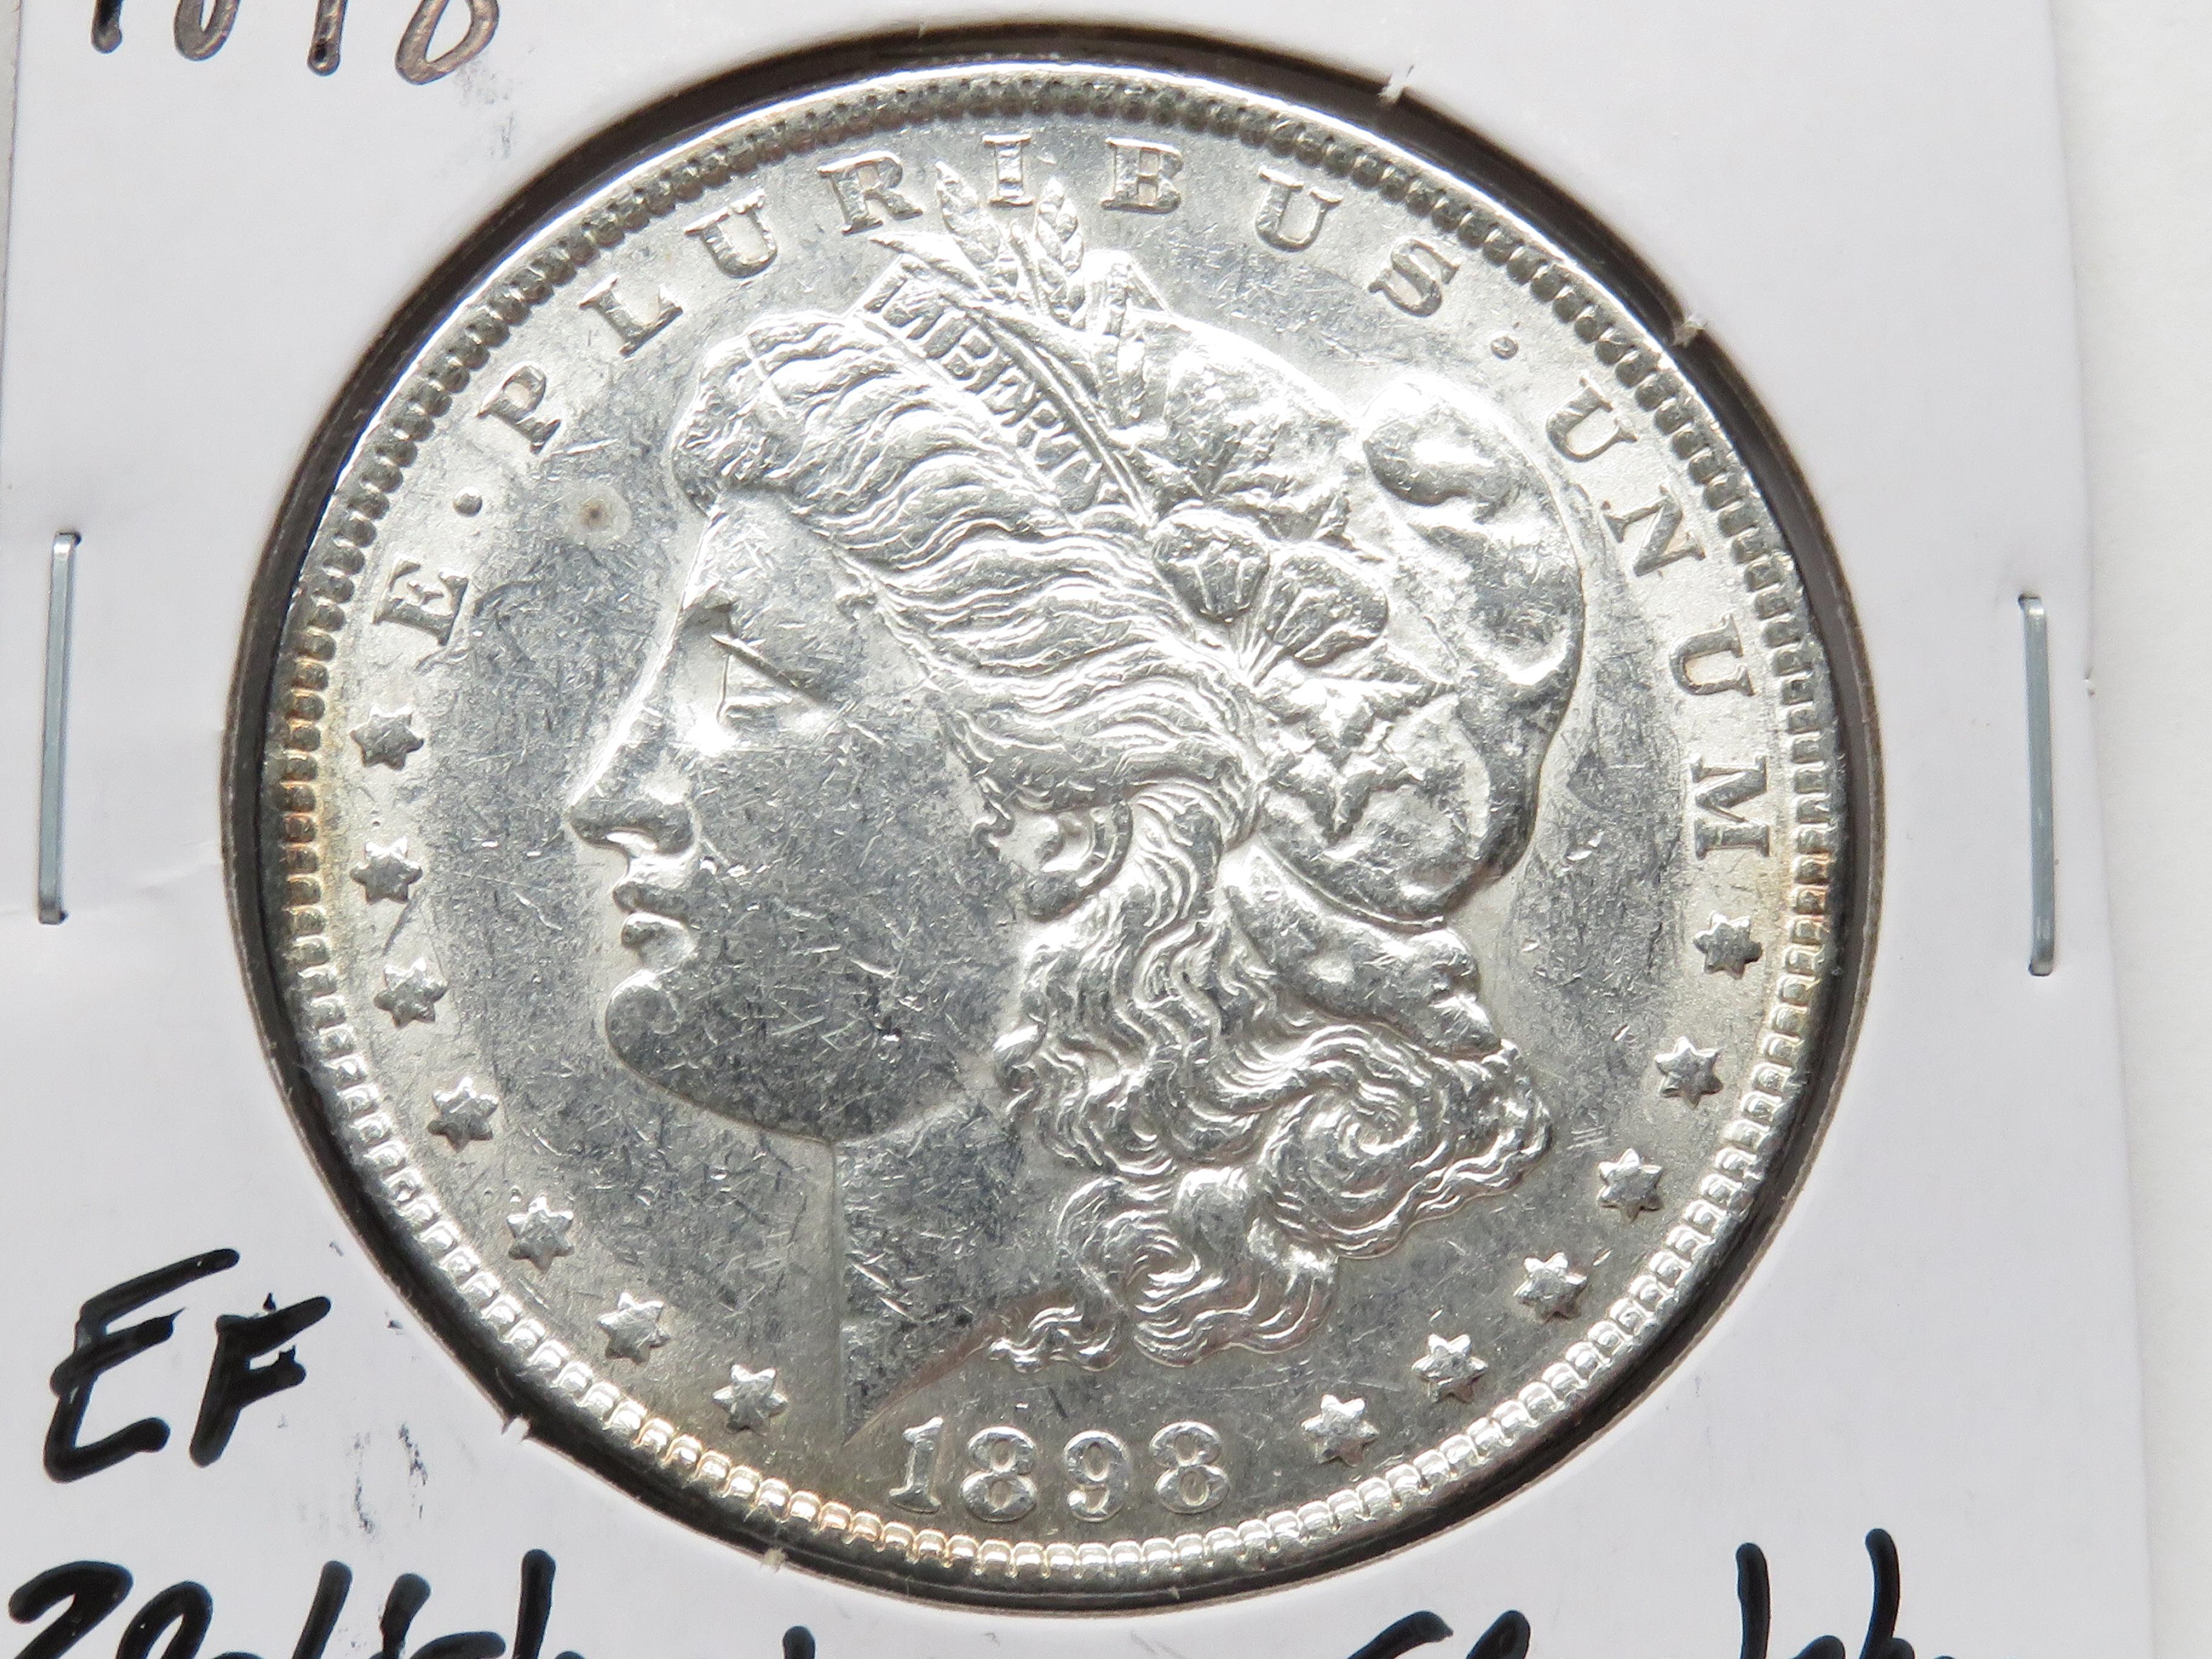 2 Morgan $: 1890S F, 1898 EF ?polished scratches